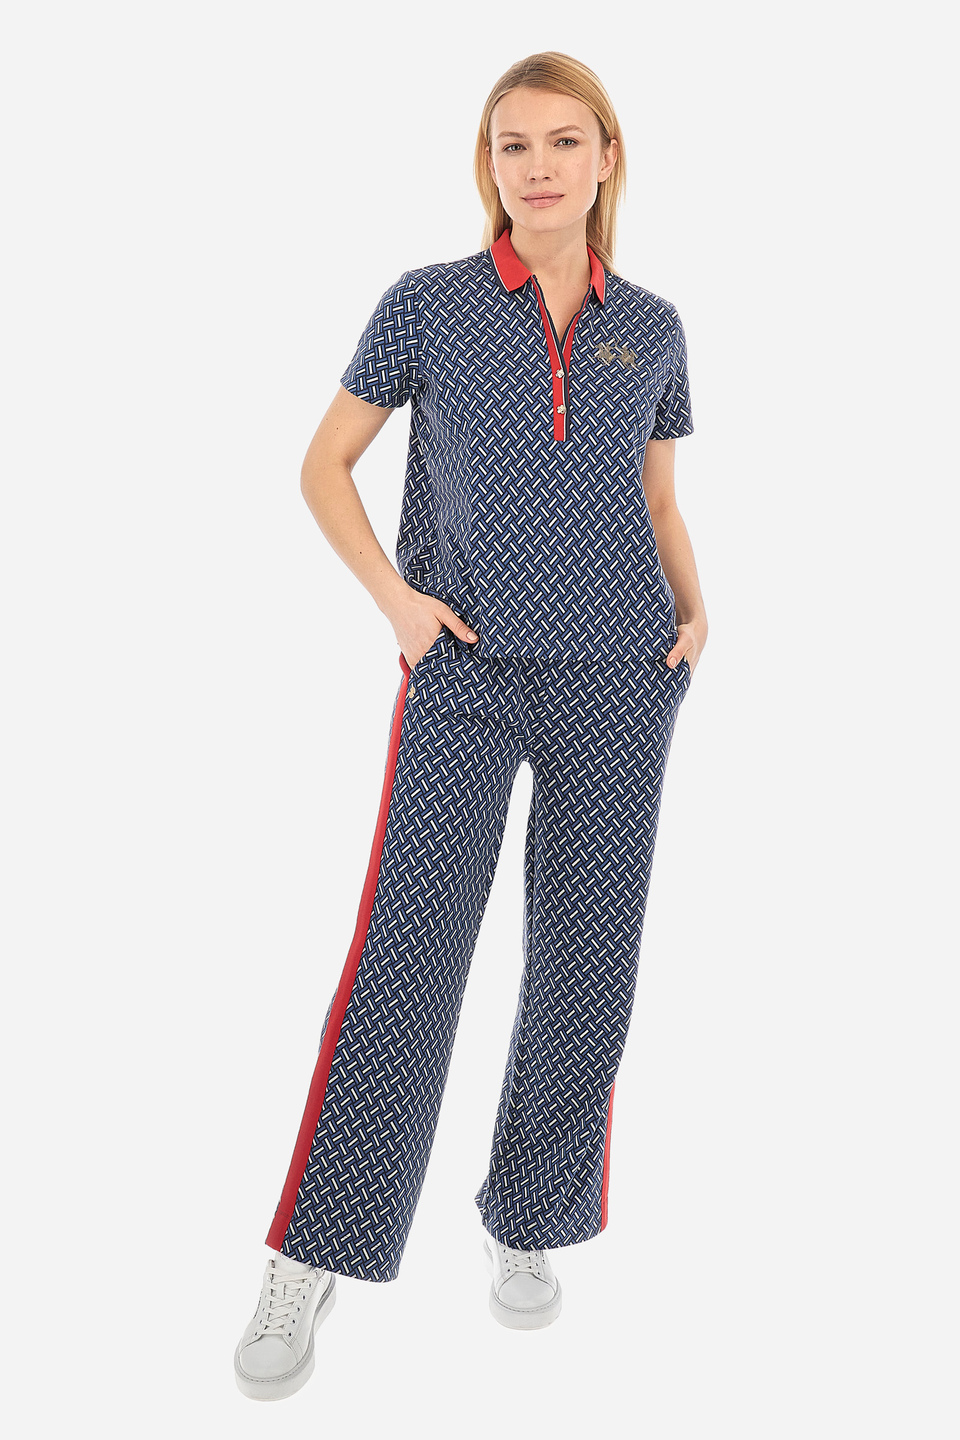 Damen-Poloshirt Regular Fit - Whitny | La Martina - Official Online Shop